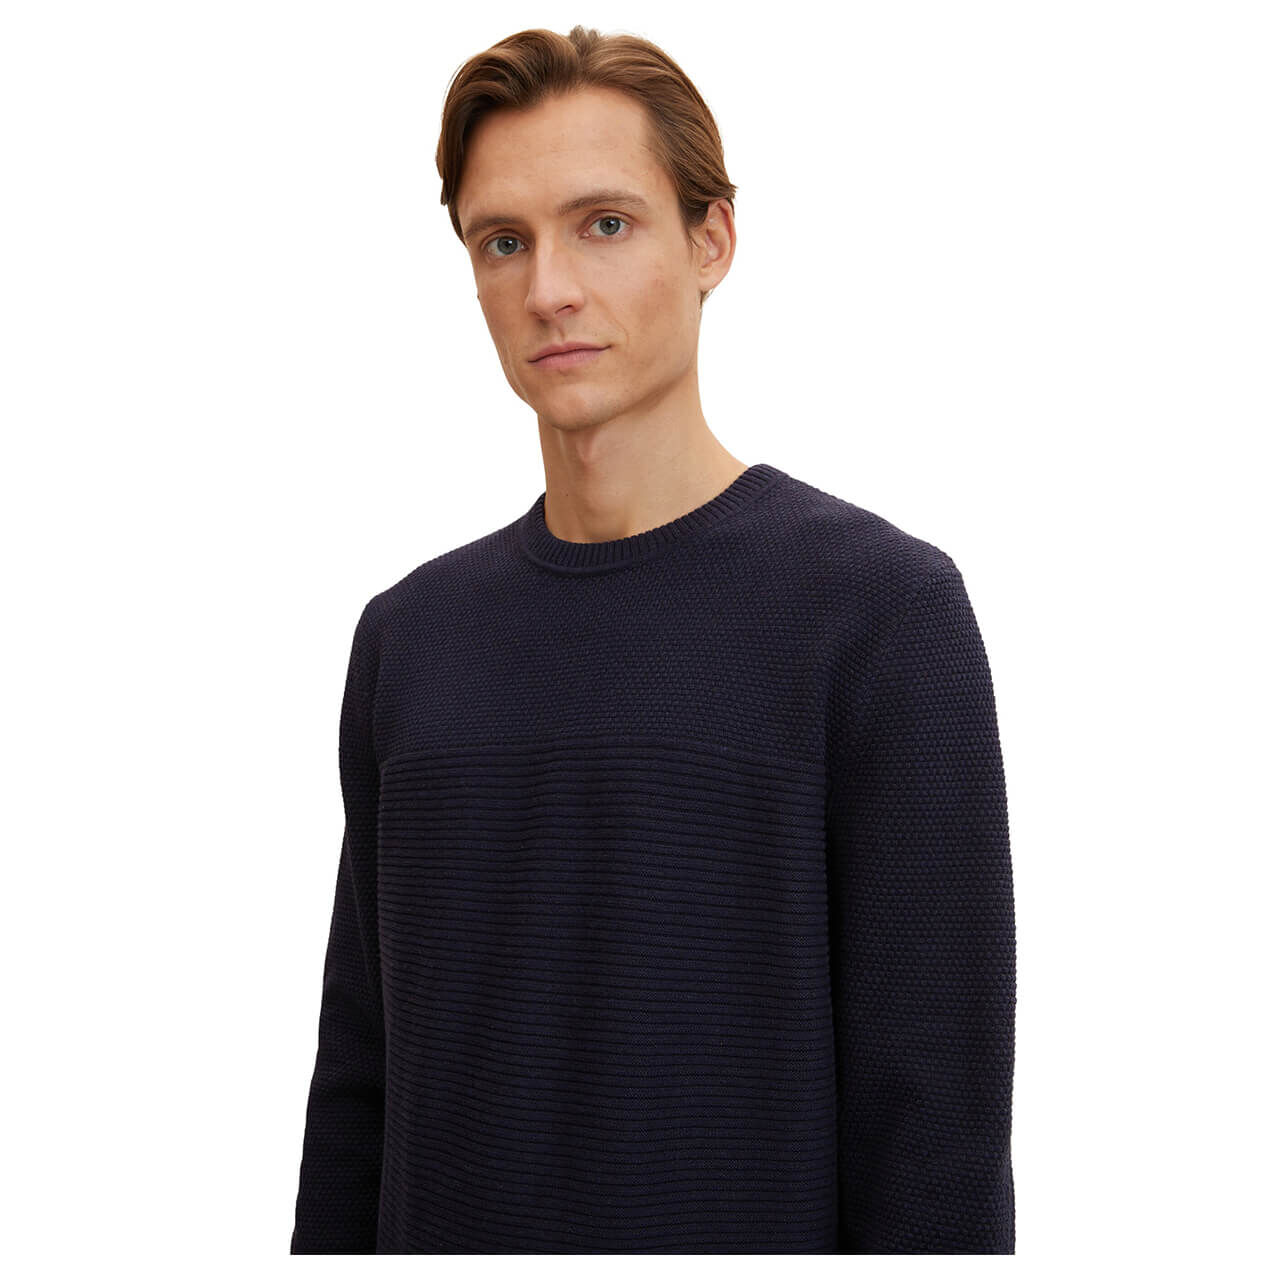 Tom Tailor Herren Basic Structured Knit Pullover navy melange